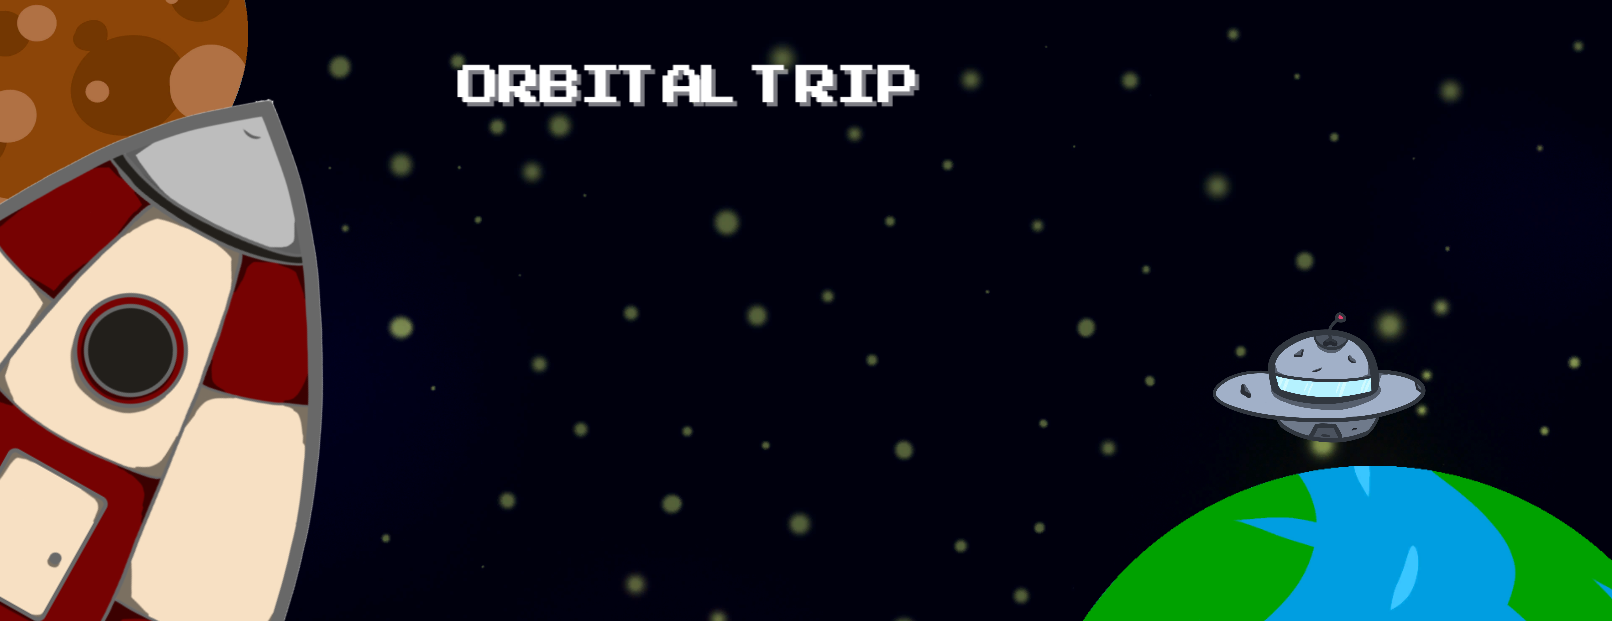 Orbital Trip